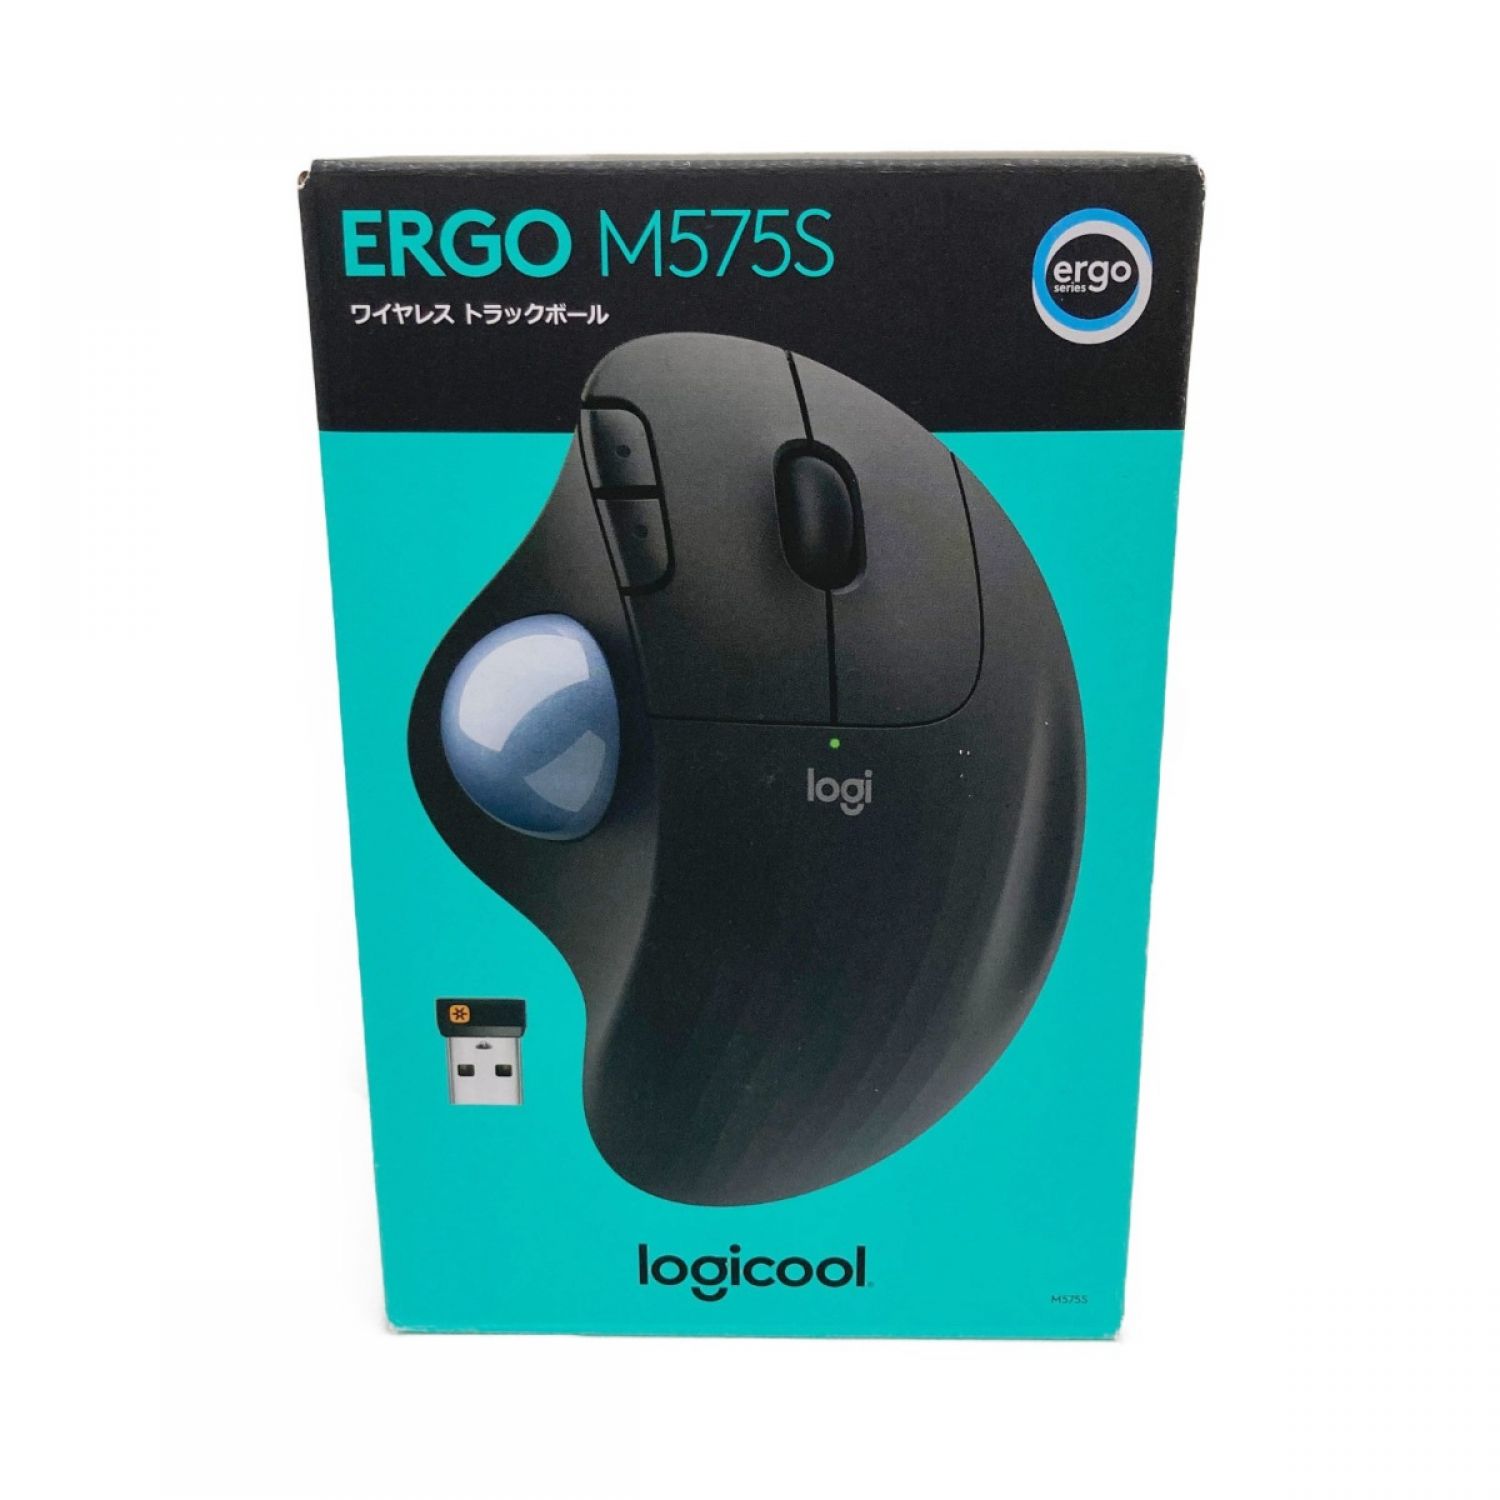 Logicool ERGO M575Sワイヤレストラックボールブラック